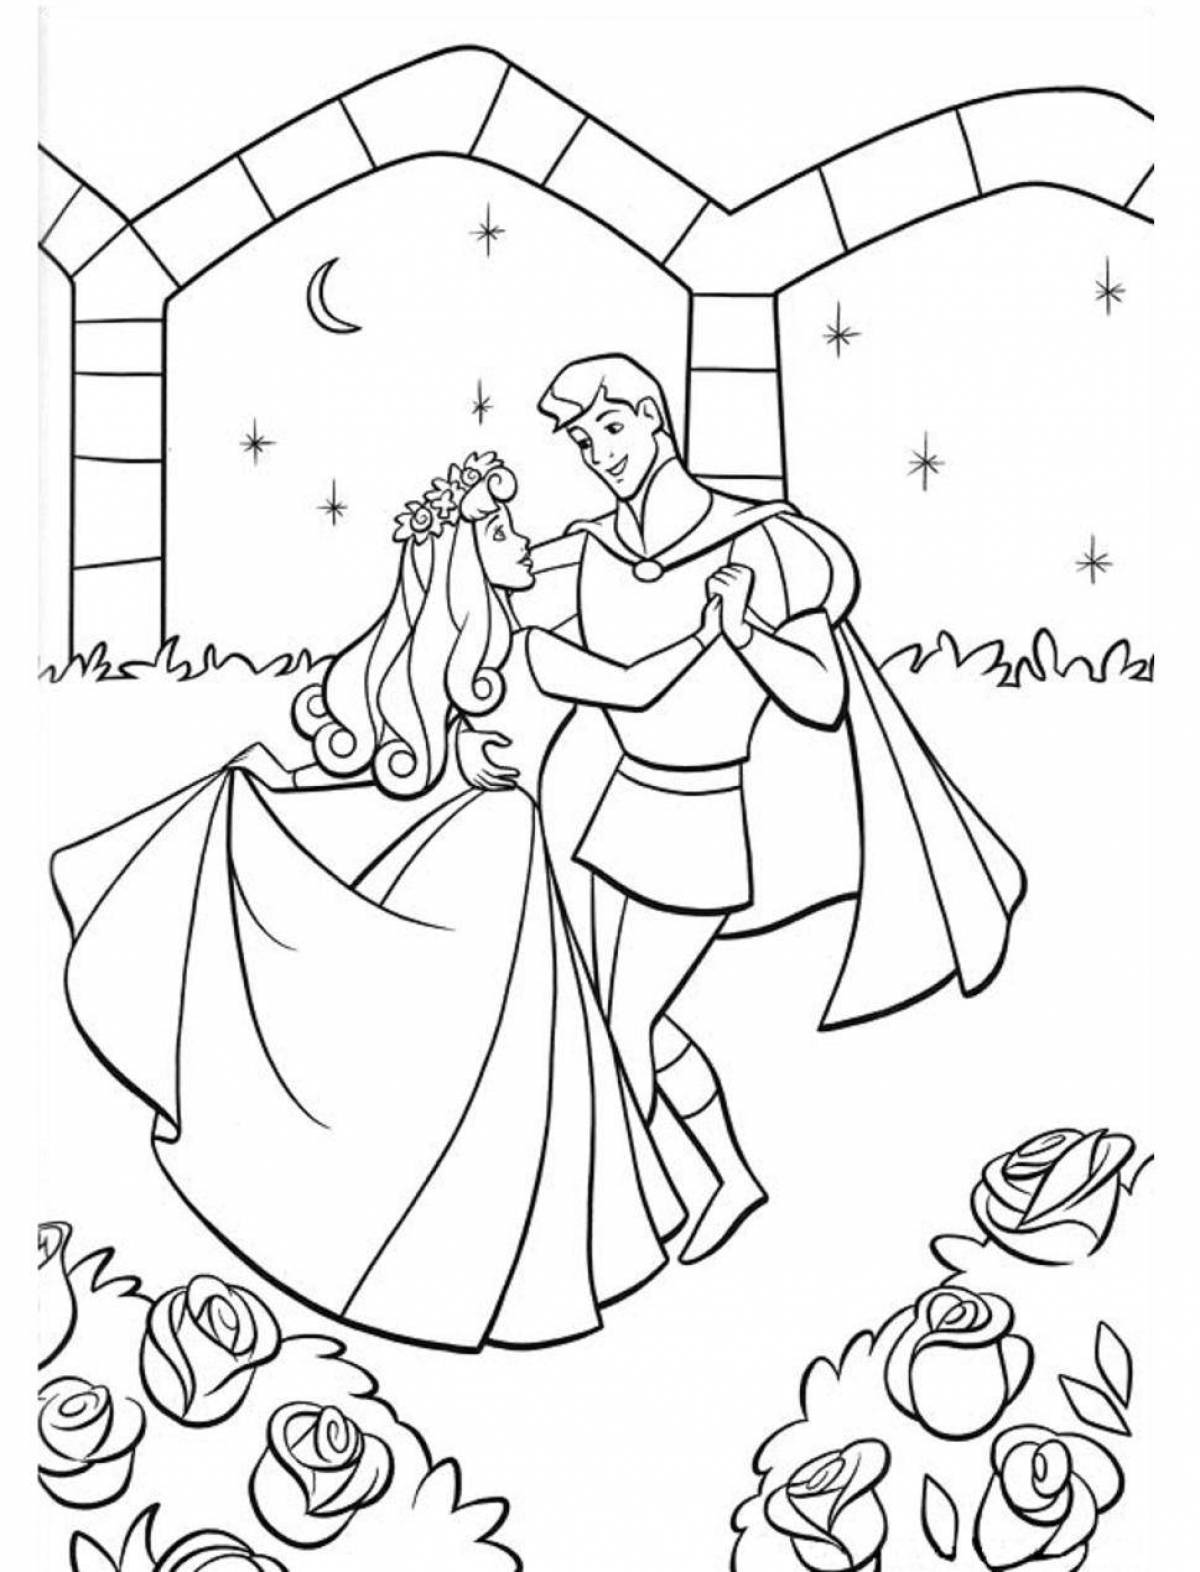 Coloring princess and prince for kids